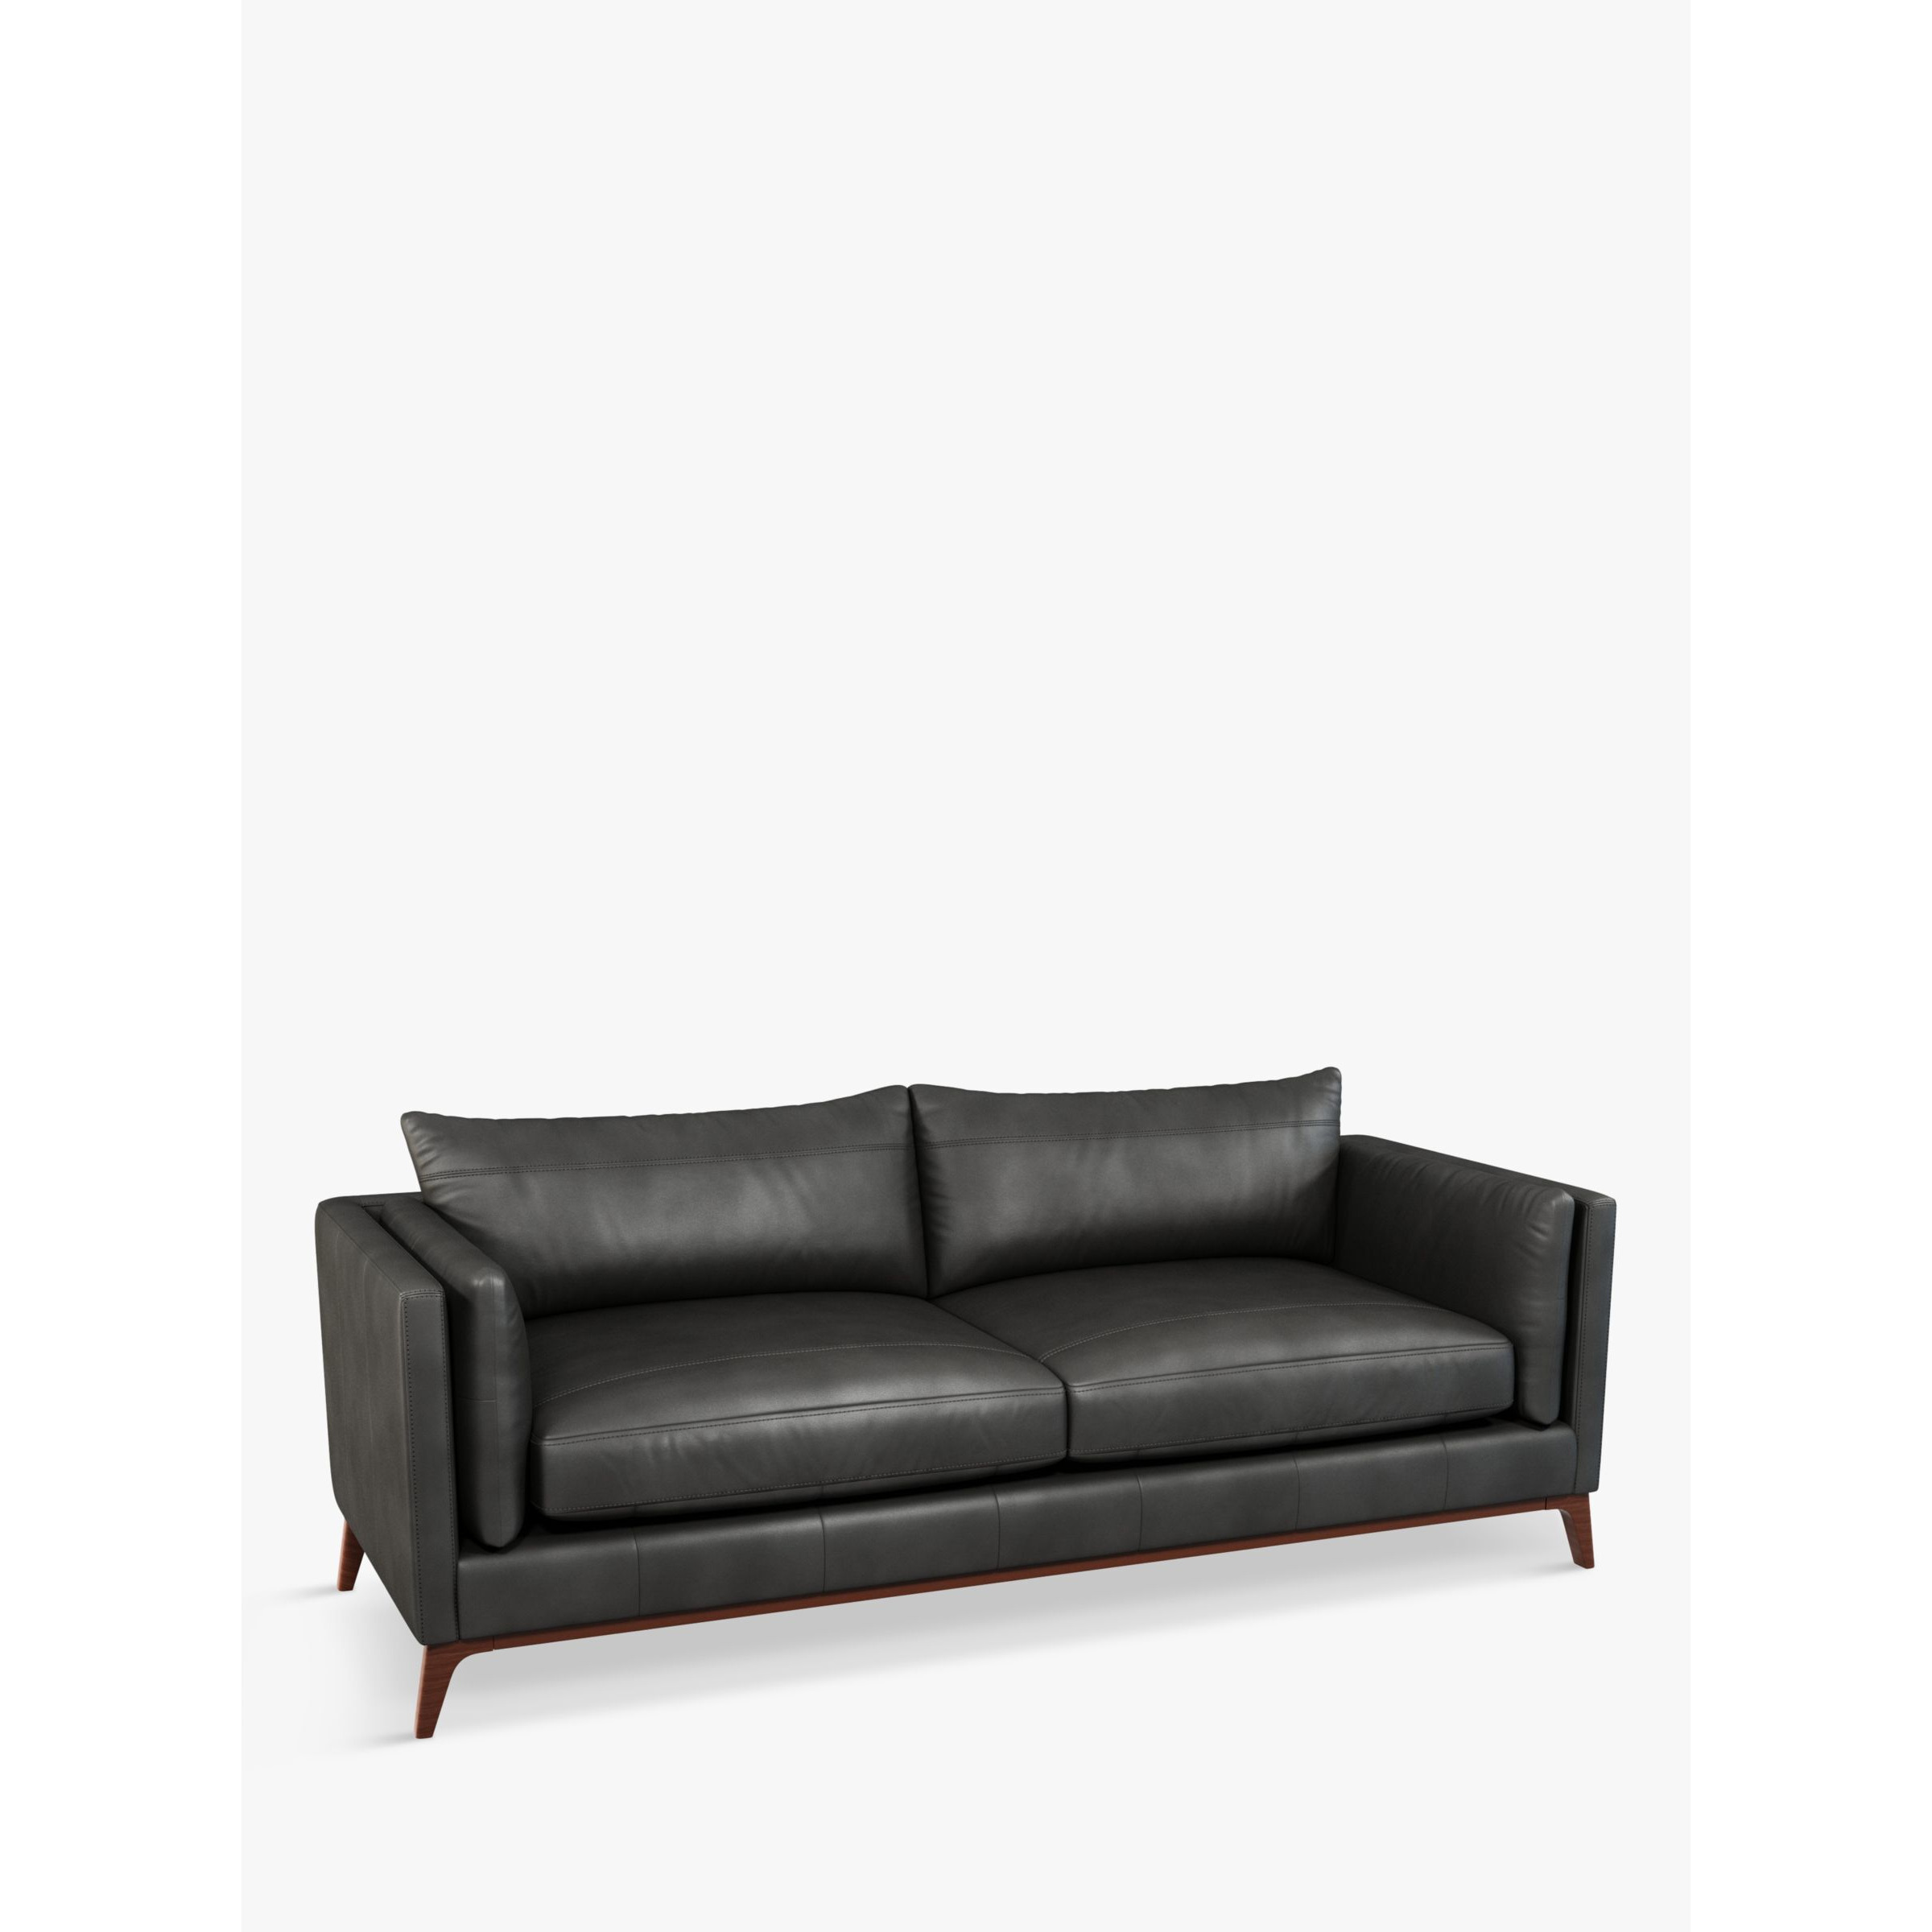 John Lewis Trim Grand 4 Seater Leather Sofa, Dark Leg - image 1